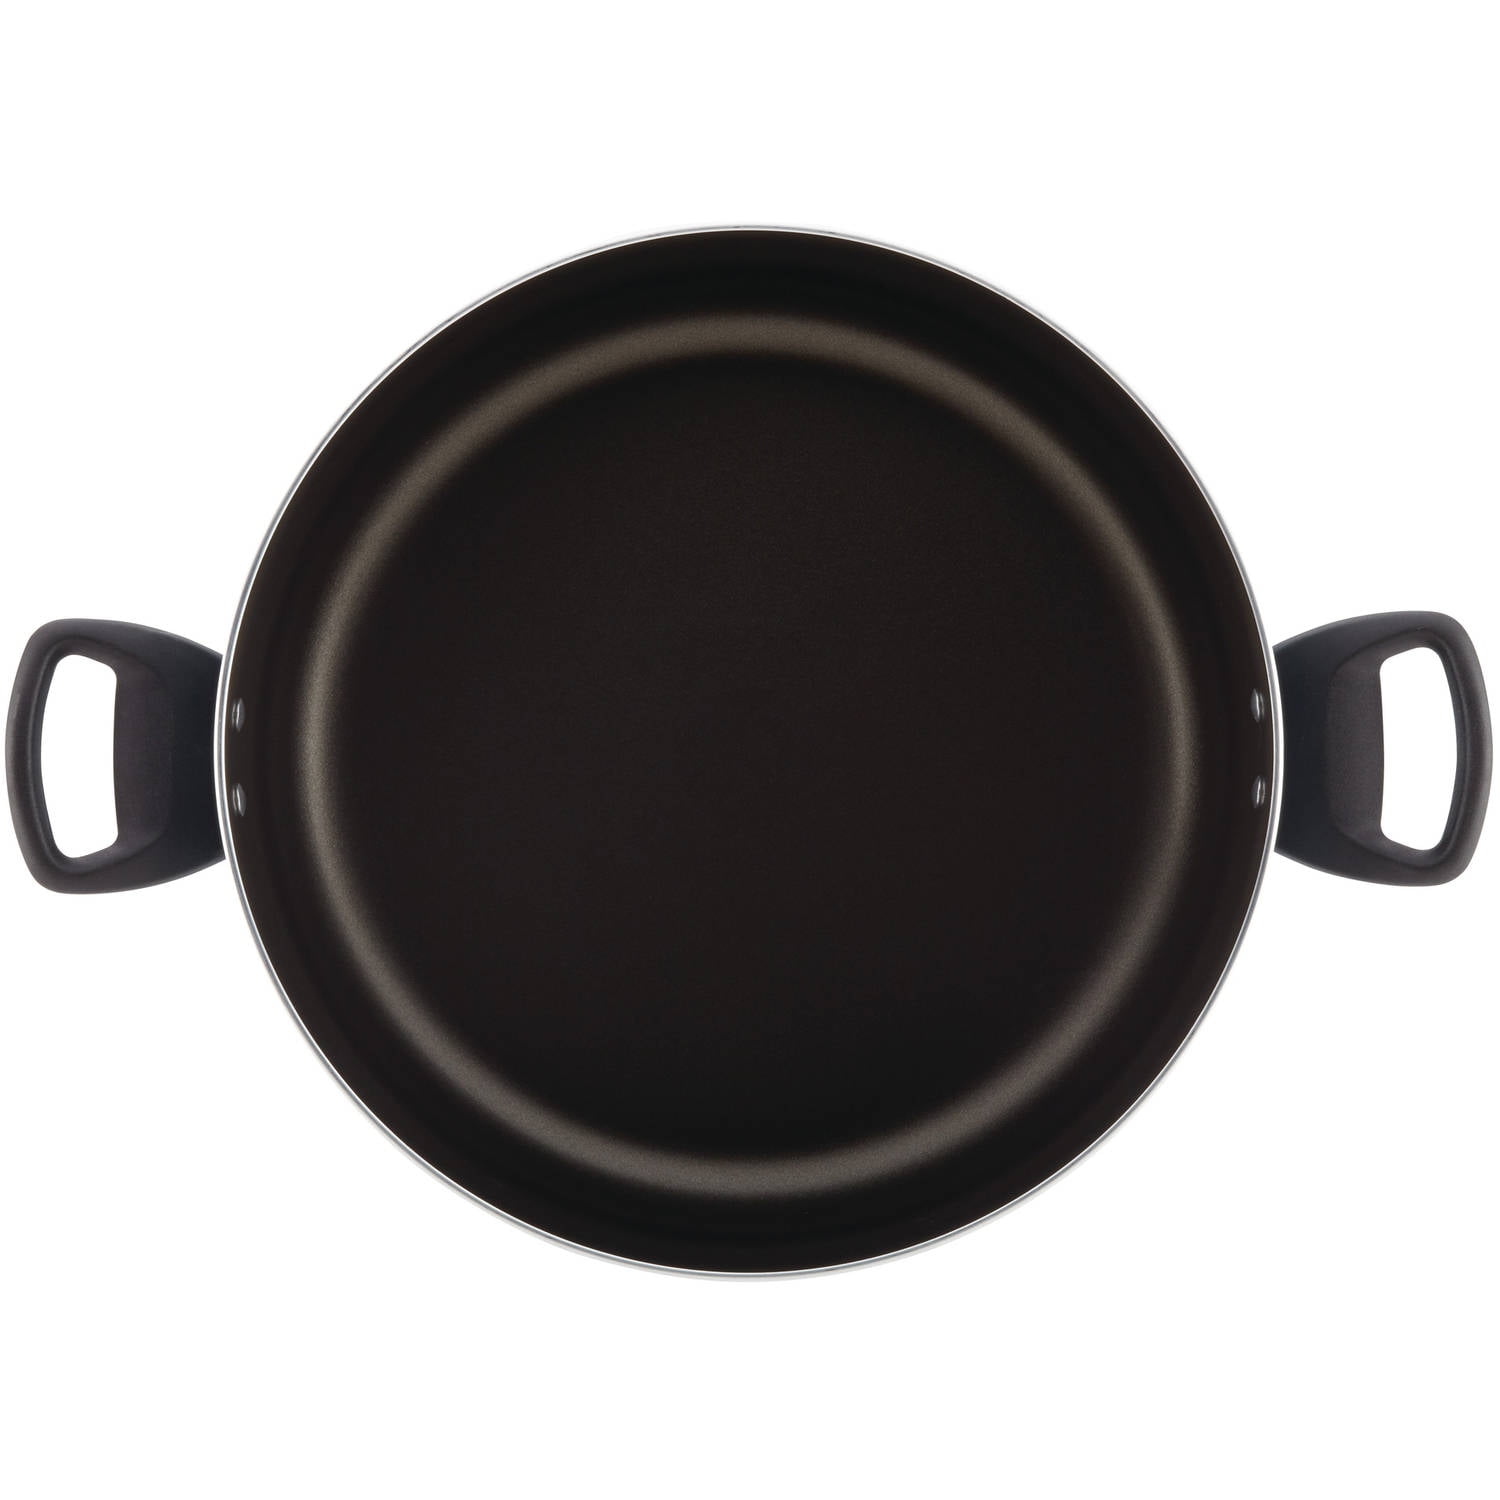 Farberware Covered Stockpot, Black, 10.5 Quart